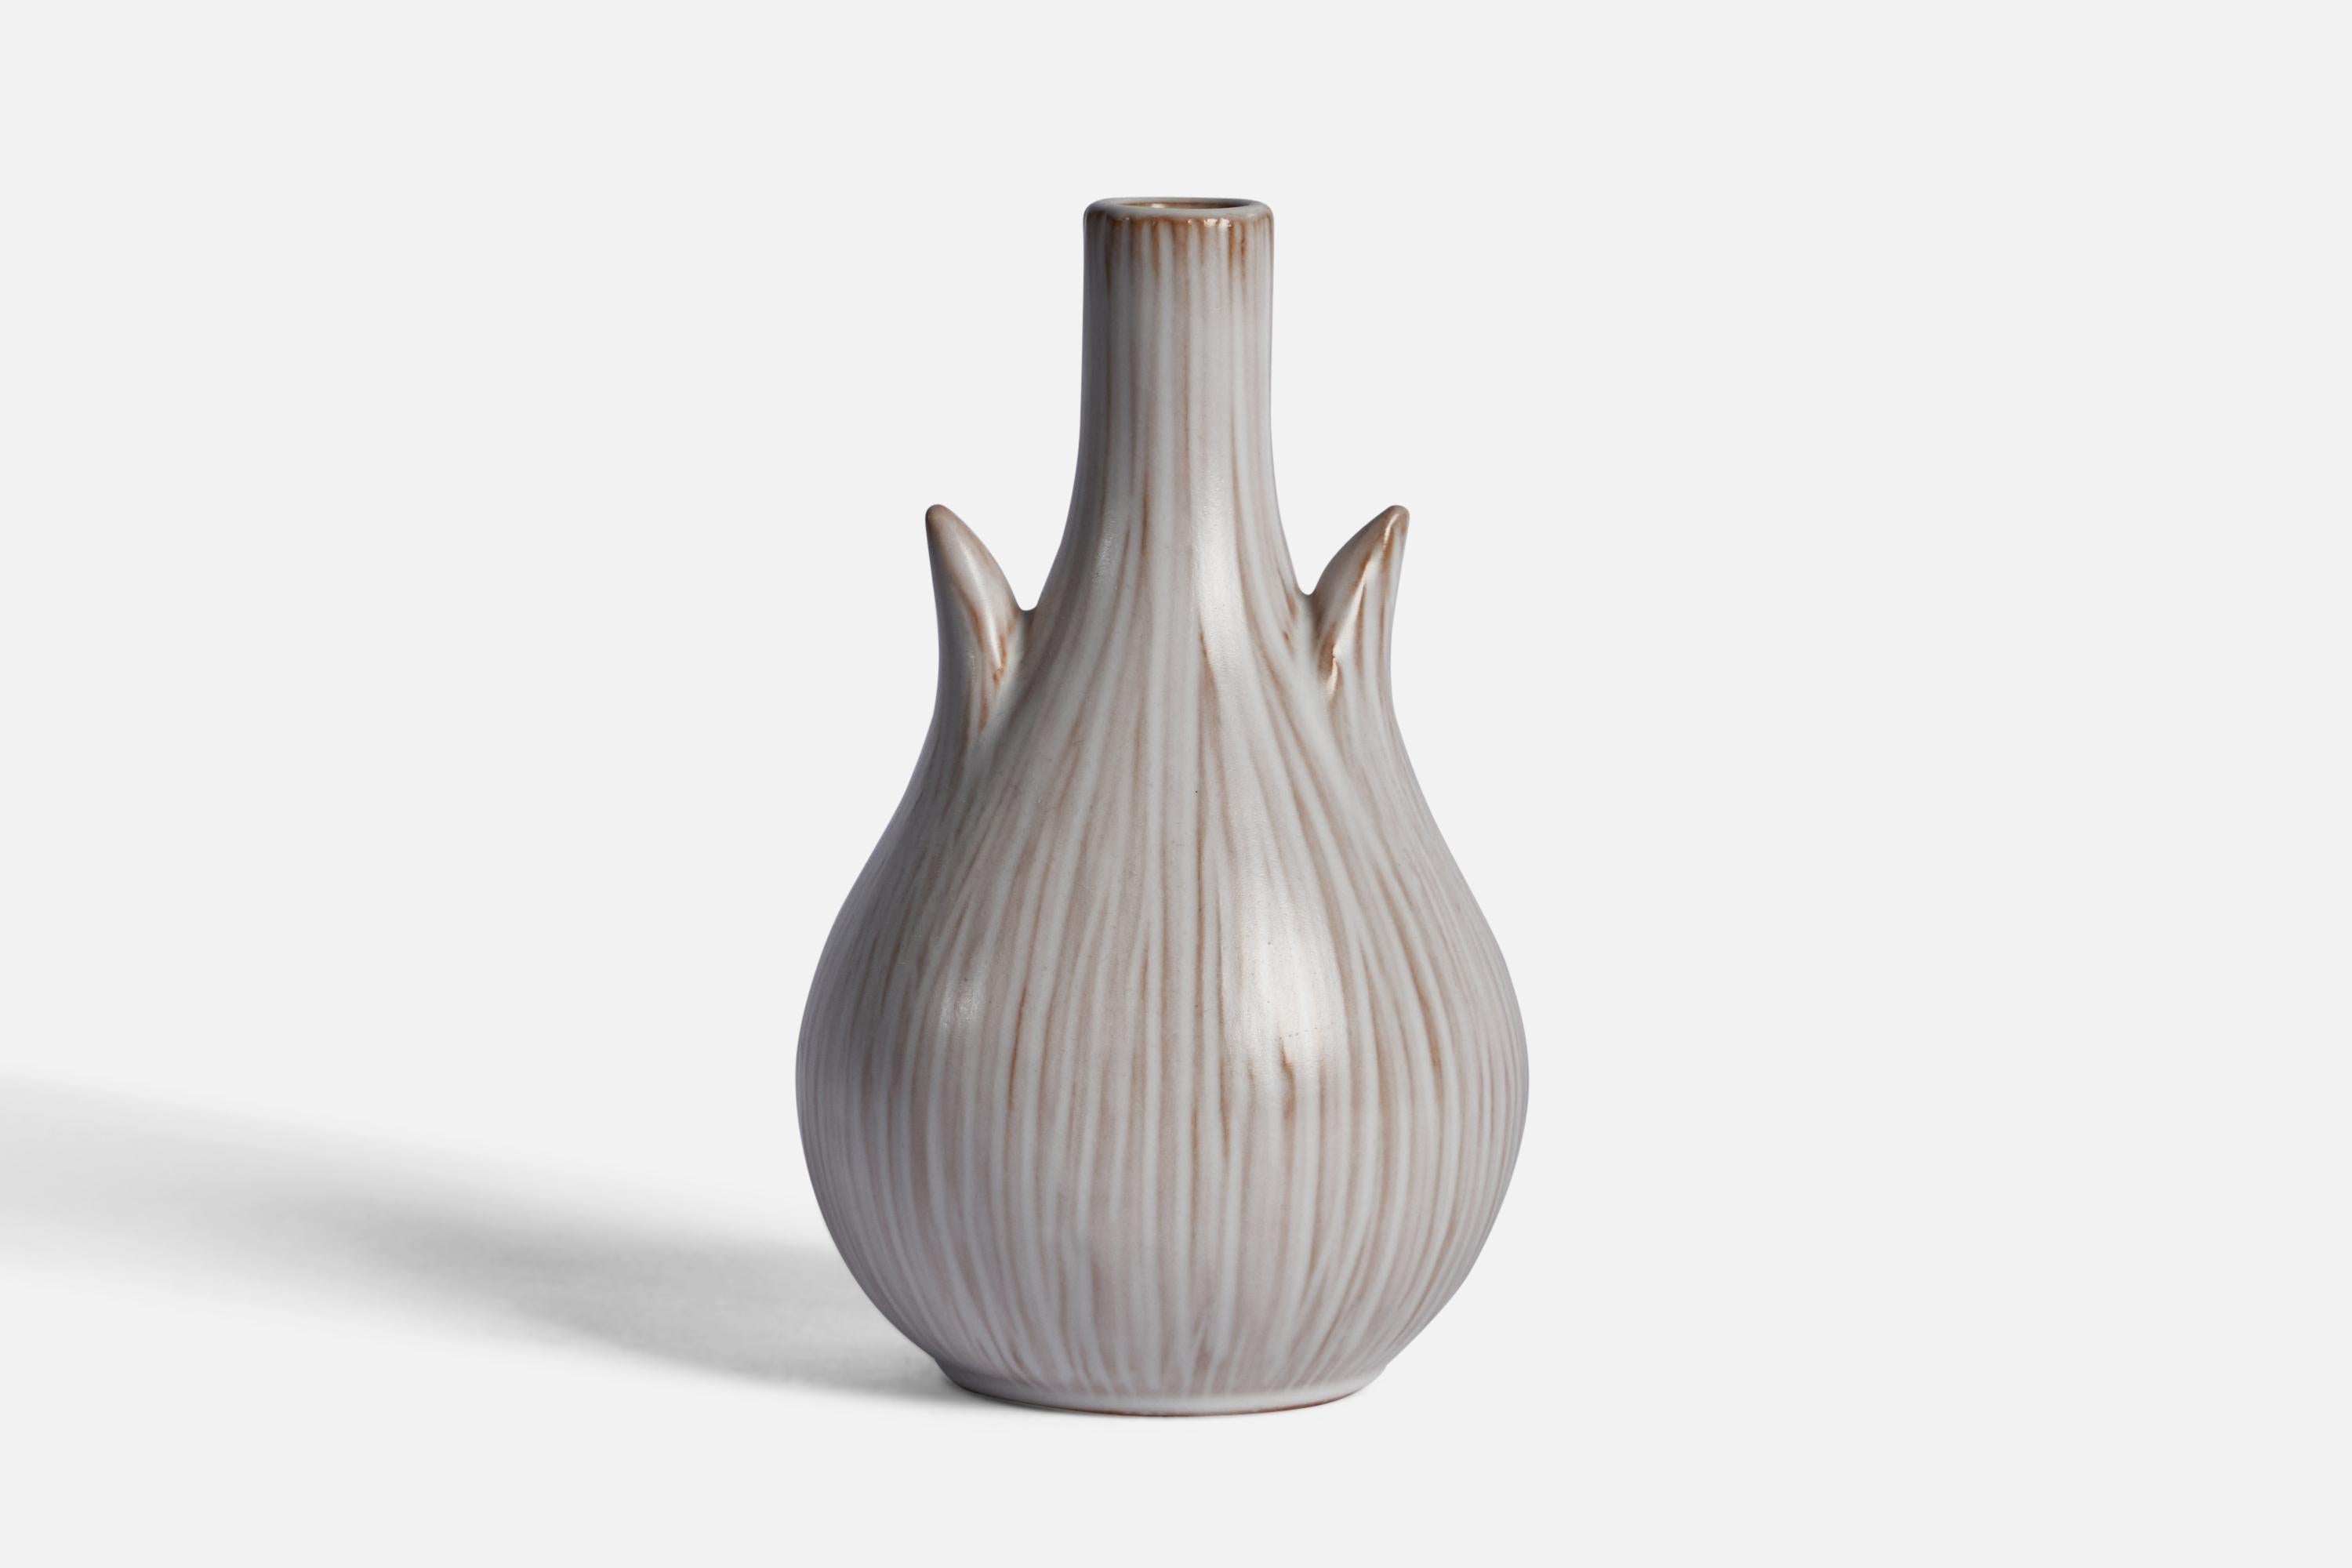 An off-white glazed vase designed and produced by Ejvind Nielsen, Denmark, c. 1960s.